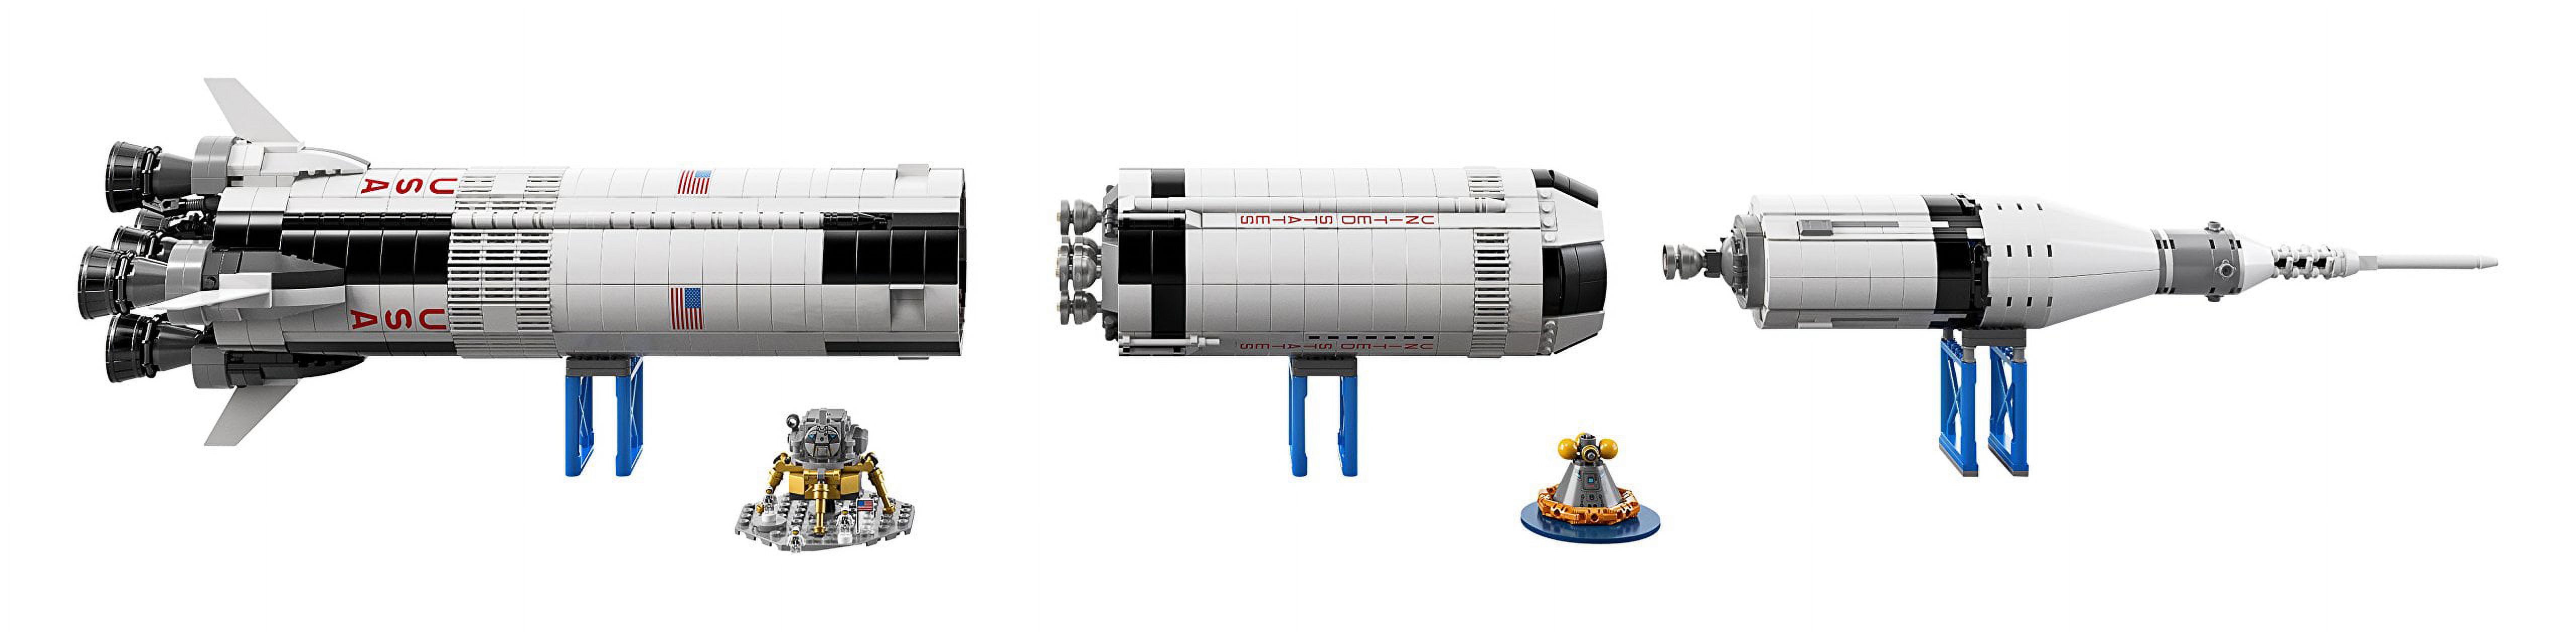 LEGO Ideas Nasa Apollo Saturn V 21309 Building Kit (1969 Piece) - image 2 of 9